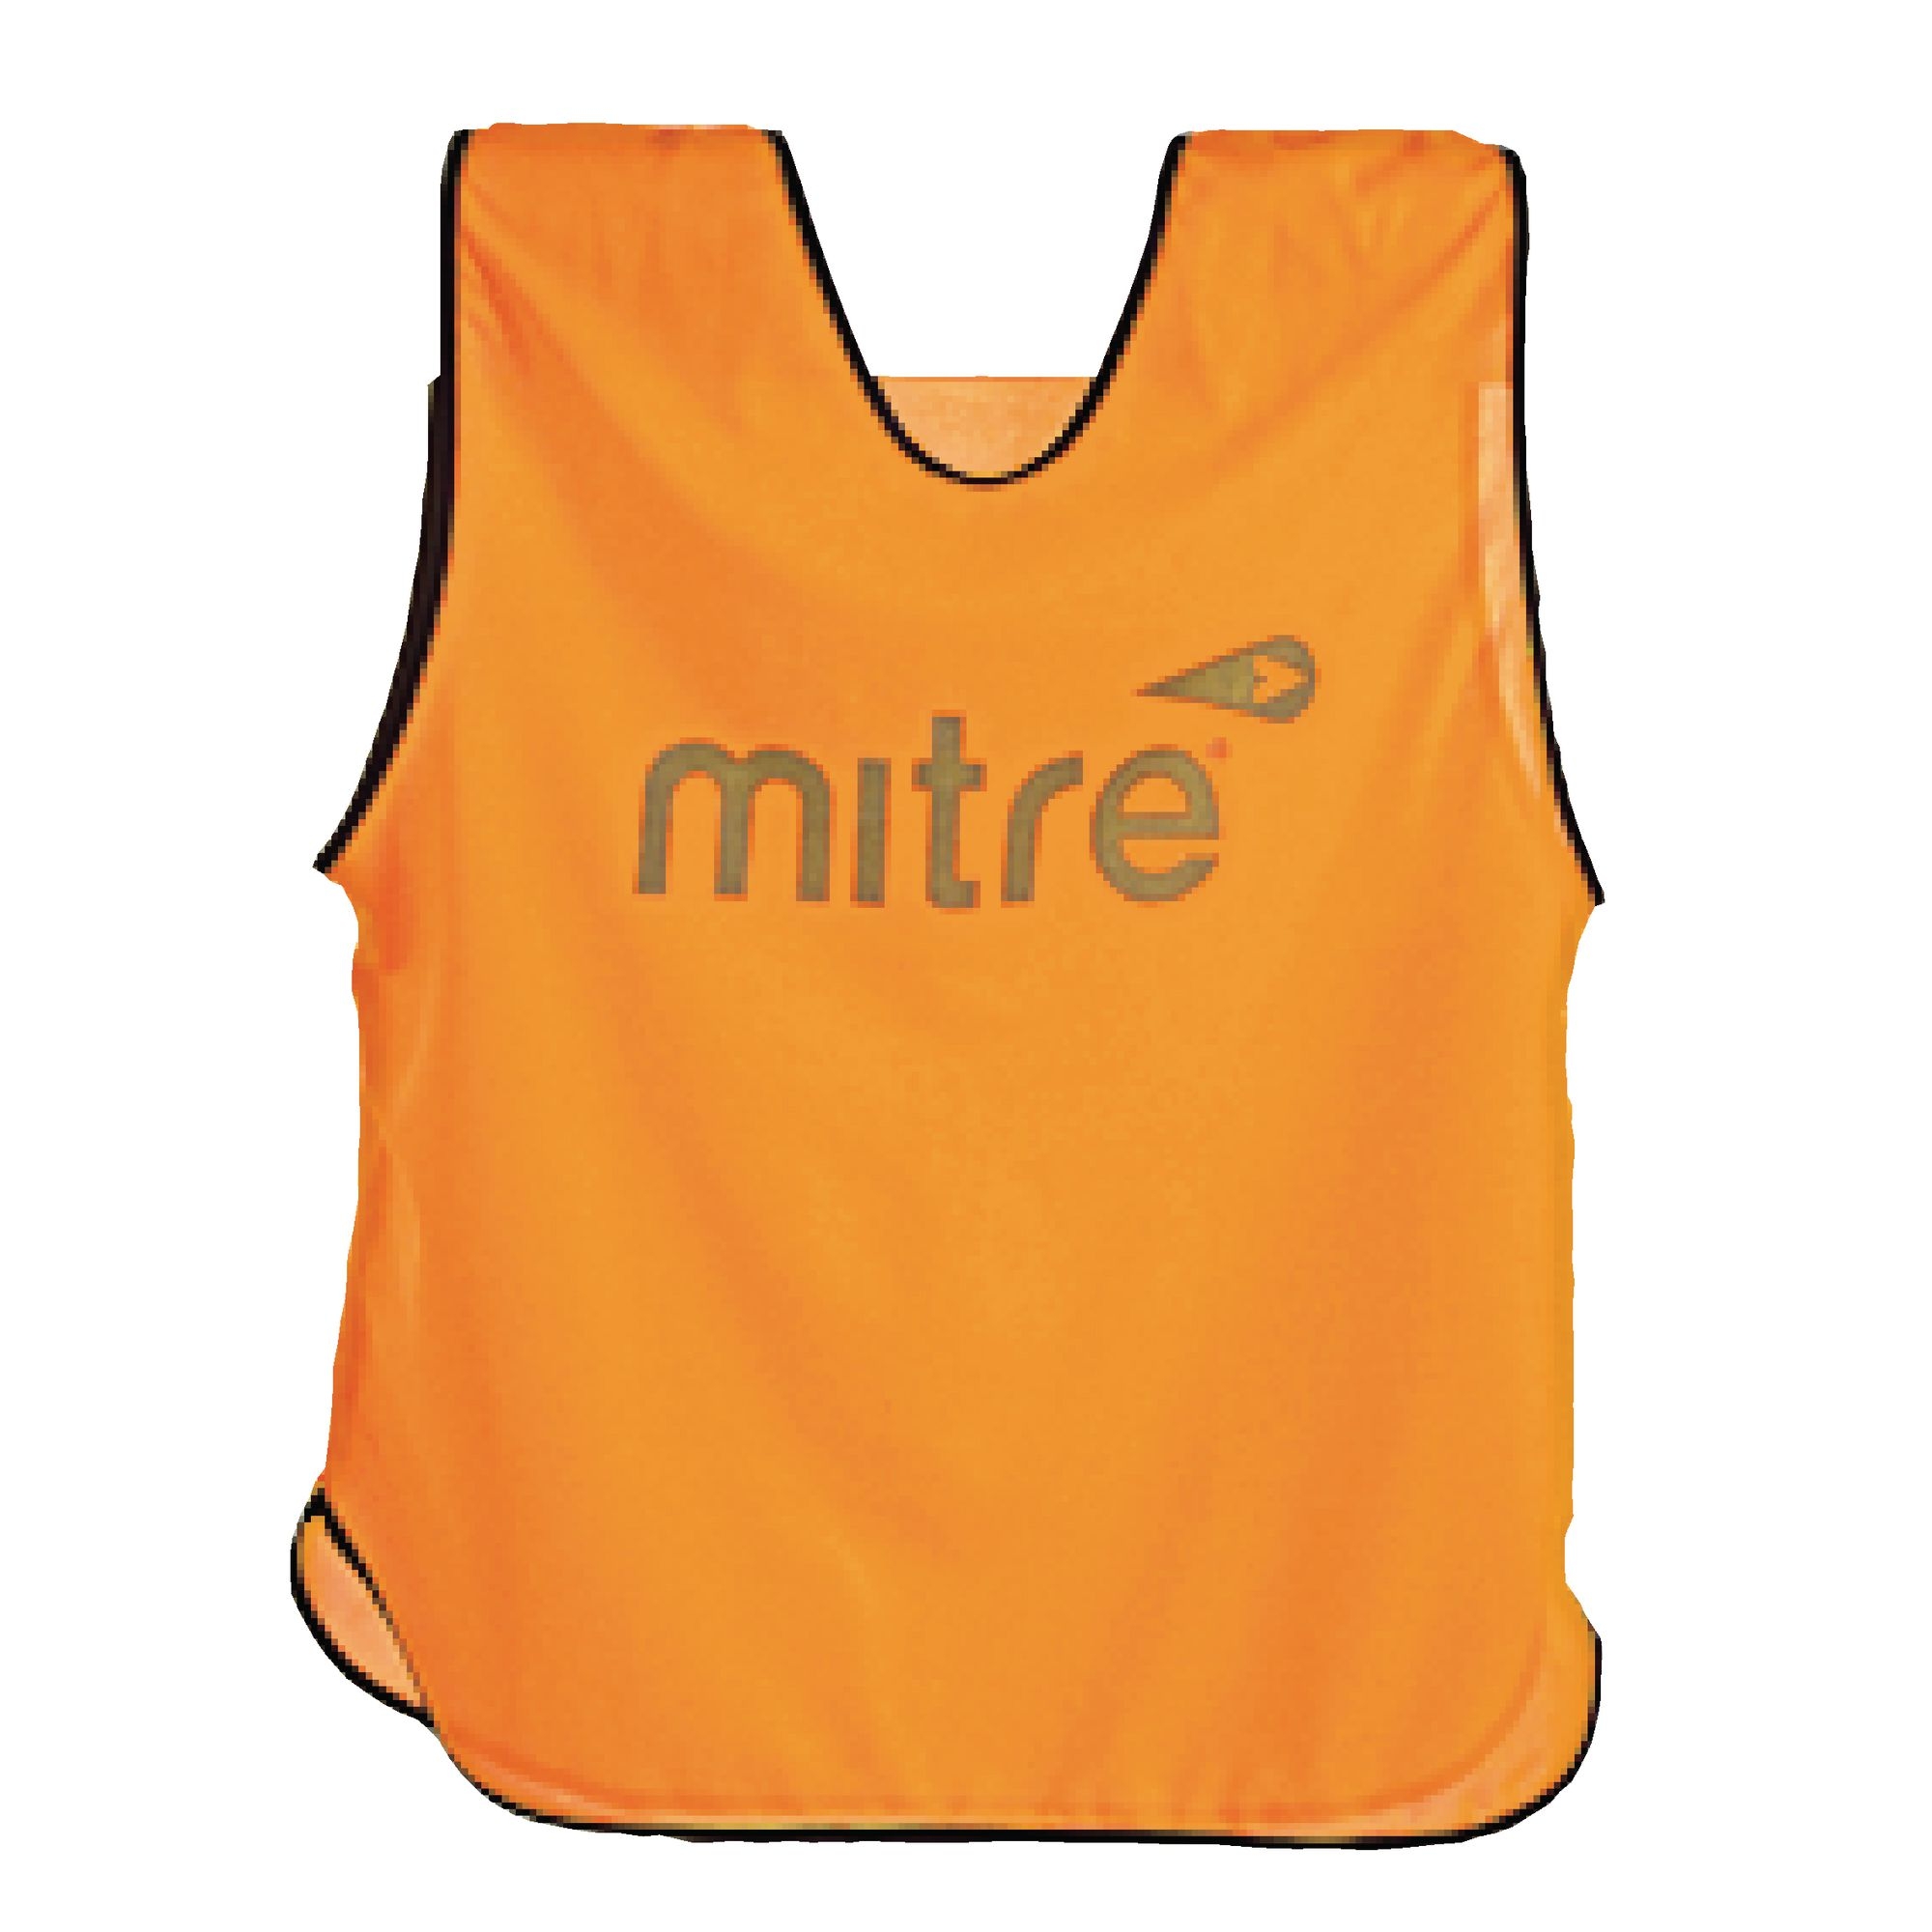 Mitre Training Bib - Adult Small-Medium - Orange/Black